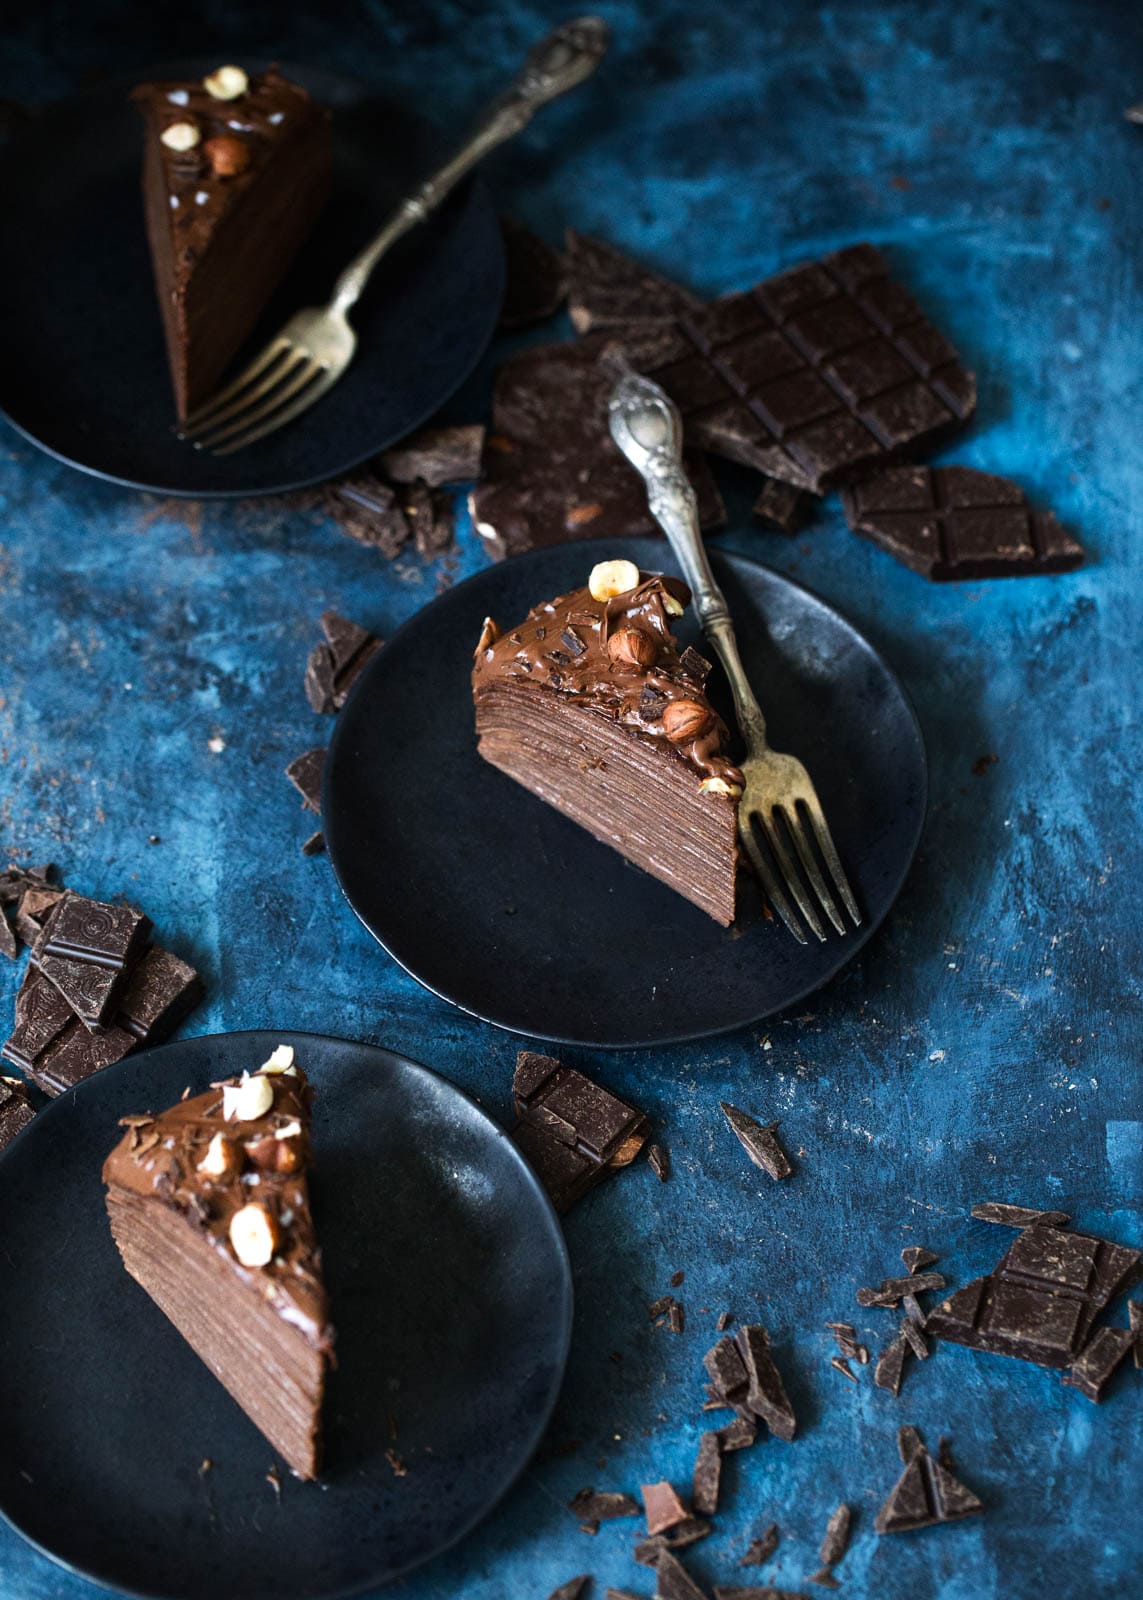 Hazelnut Chocolate Crepe Cake slices on plates with chocolate pieces